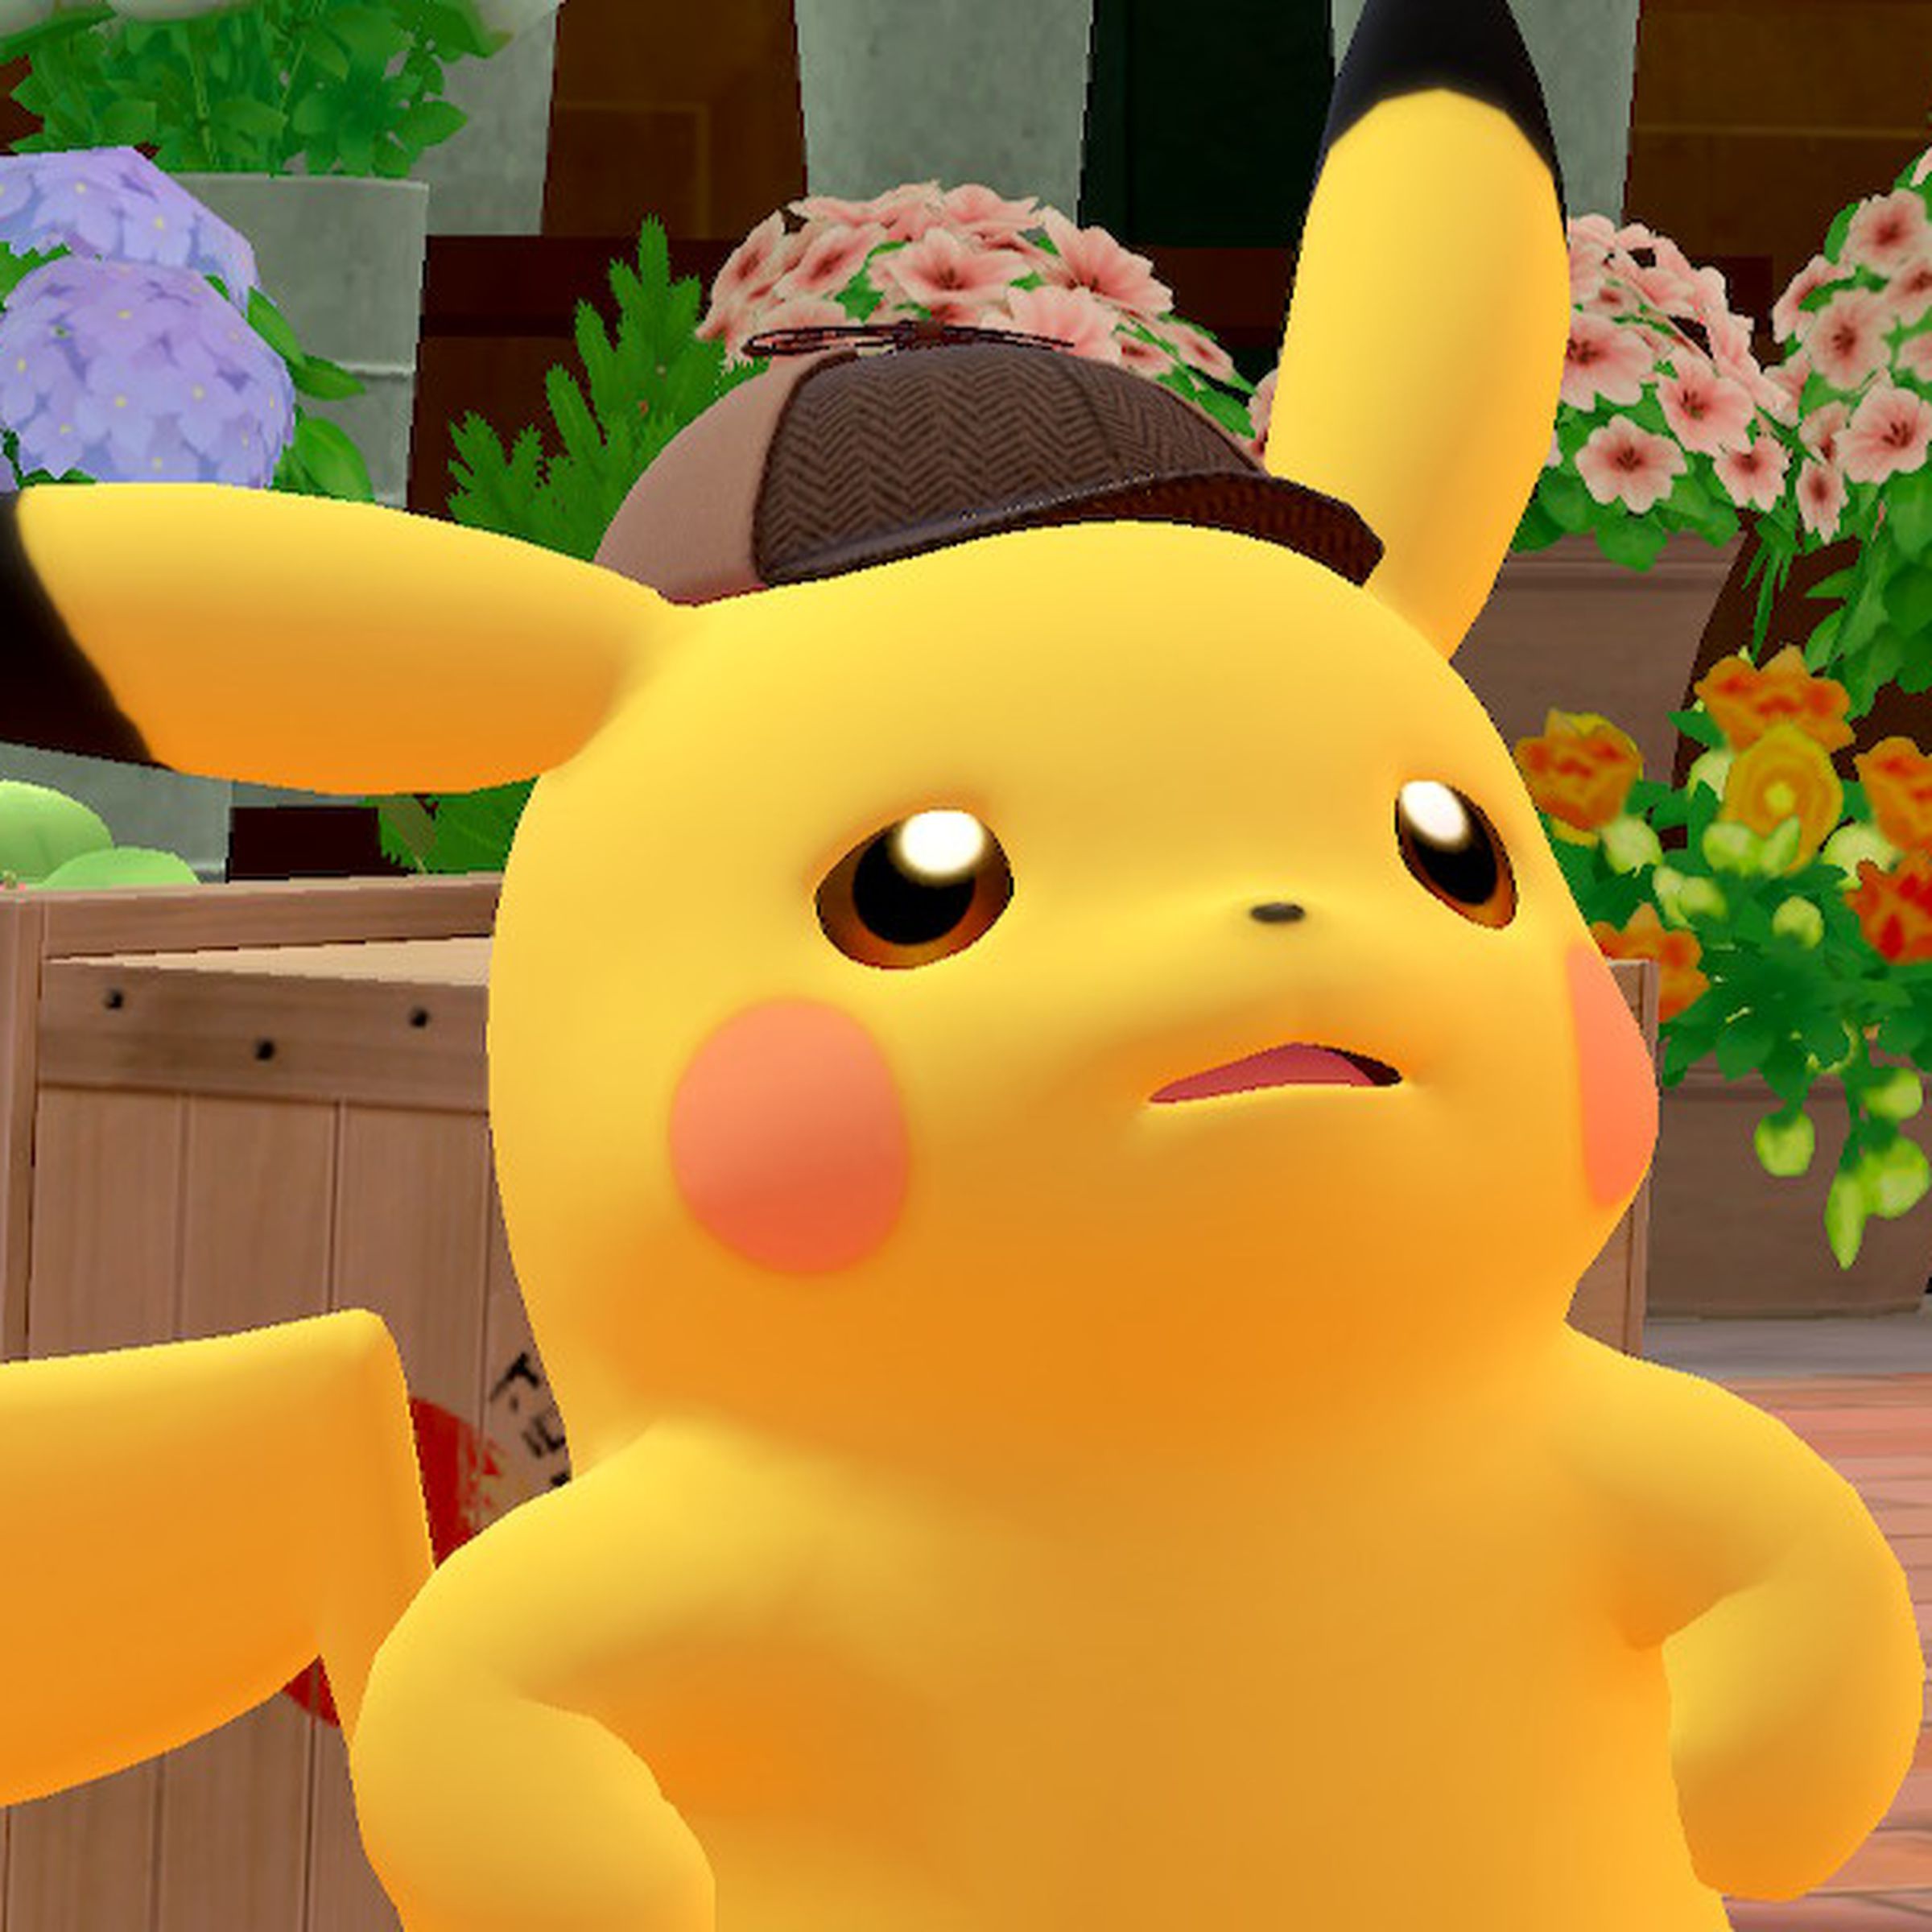 Pikachu in Detective Pikachu Returns